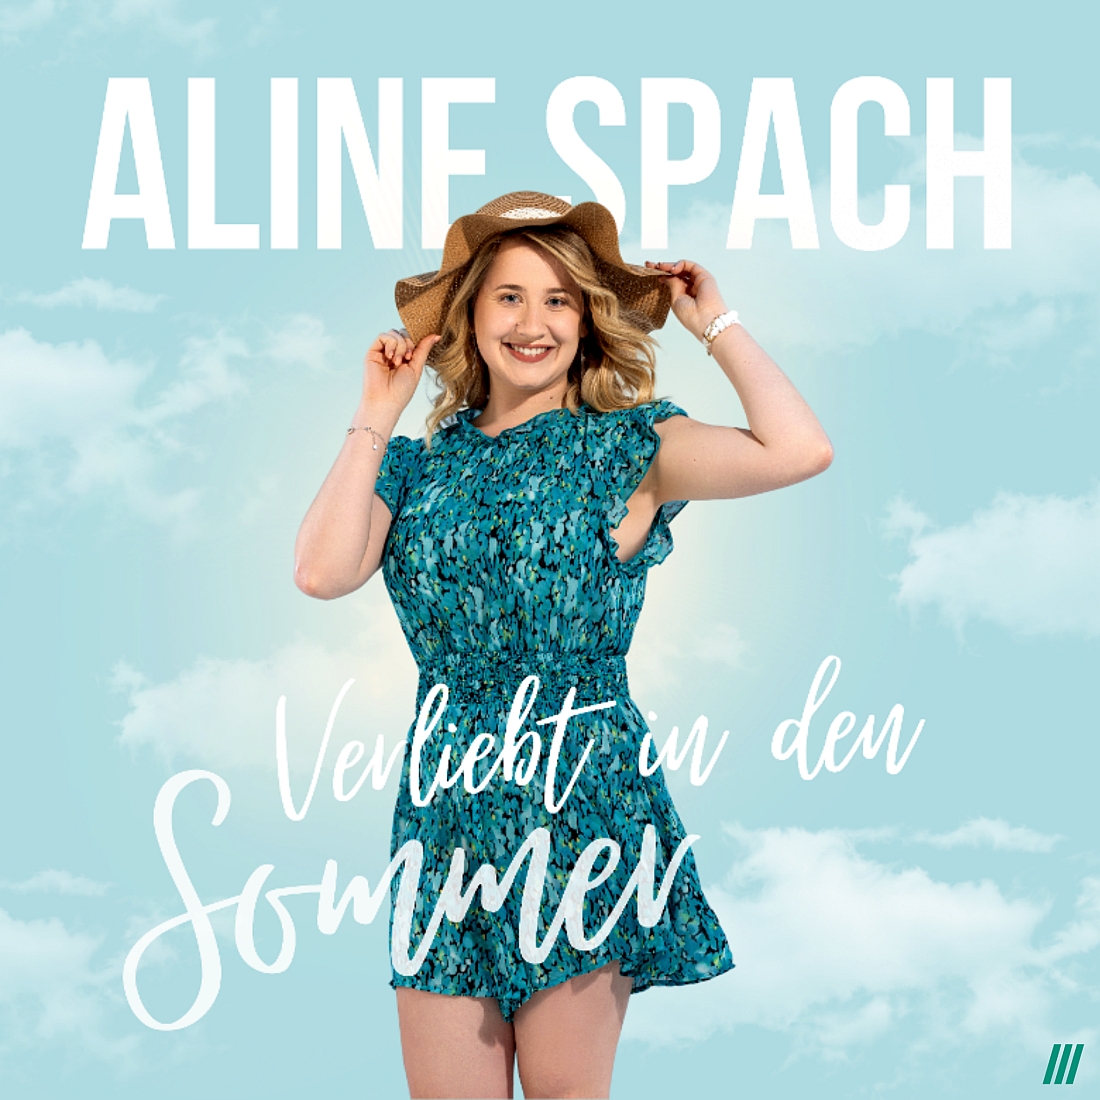 Aline Spach - Verliebt in den Sommer (AVA Music)